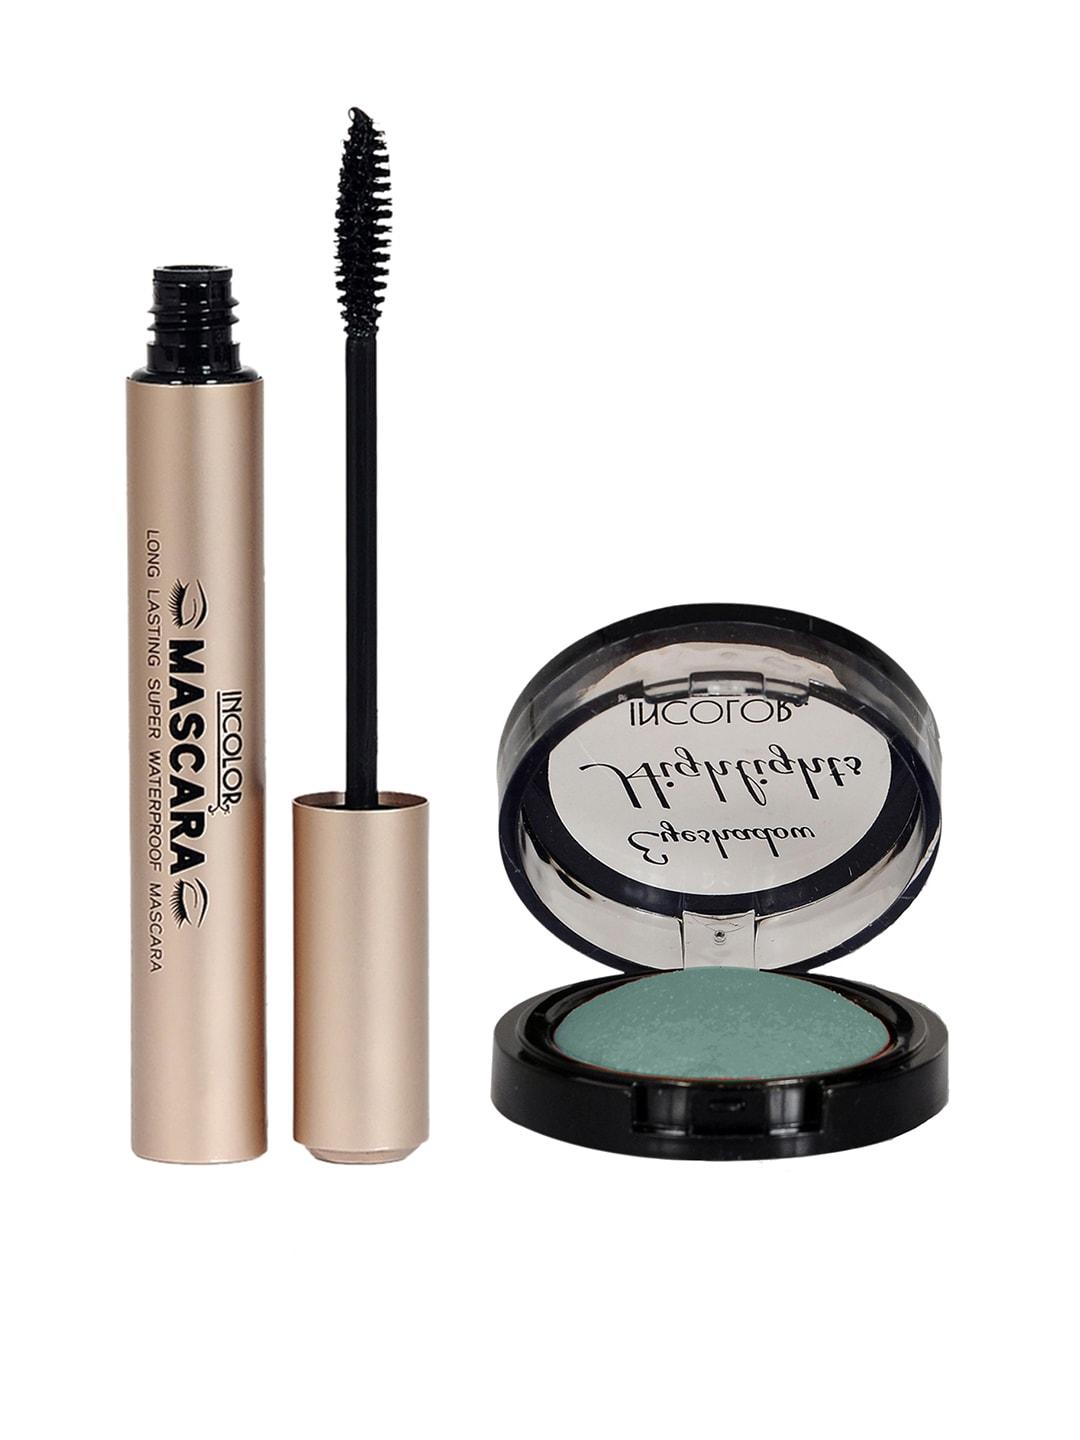 incolor set of black dense super waterproof mascara & teal green highlight eyeshadow 07